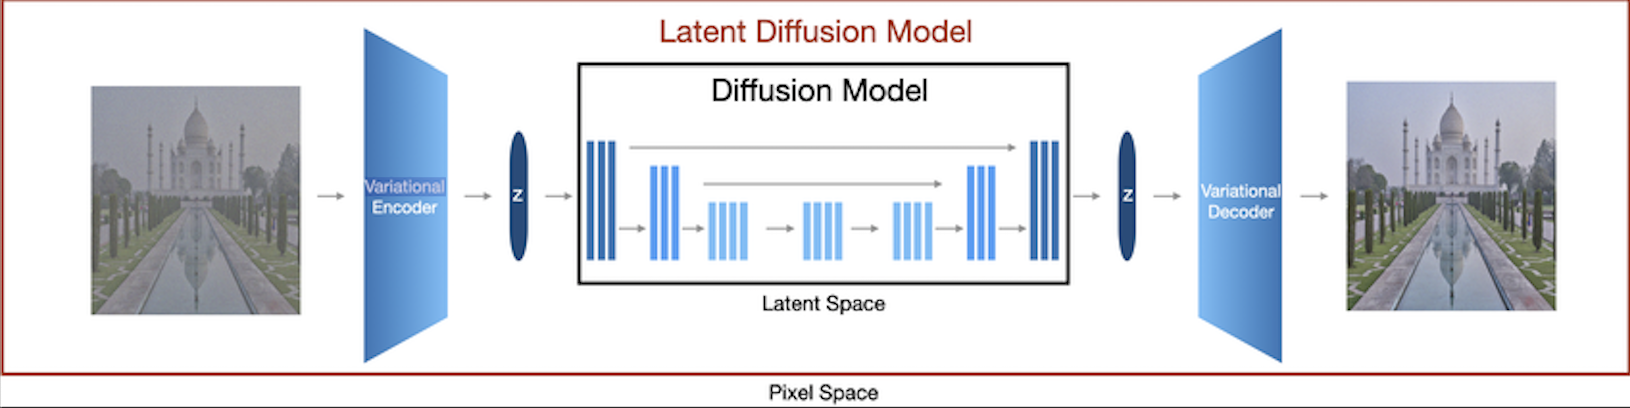 Latent Diffusion Models